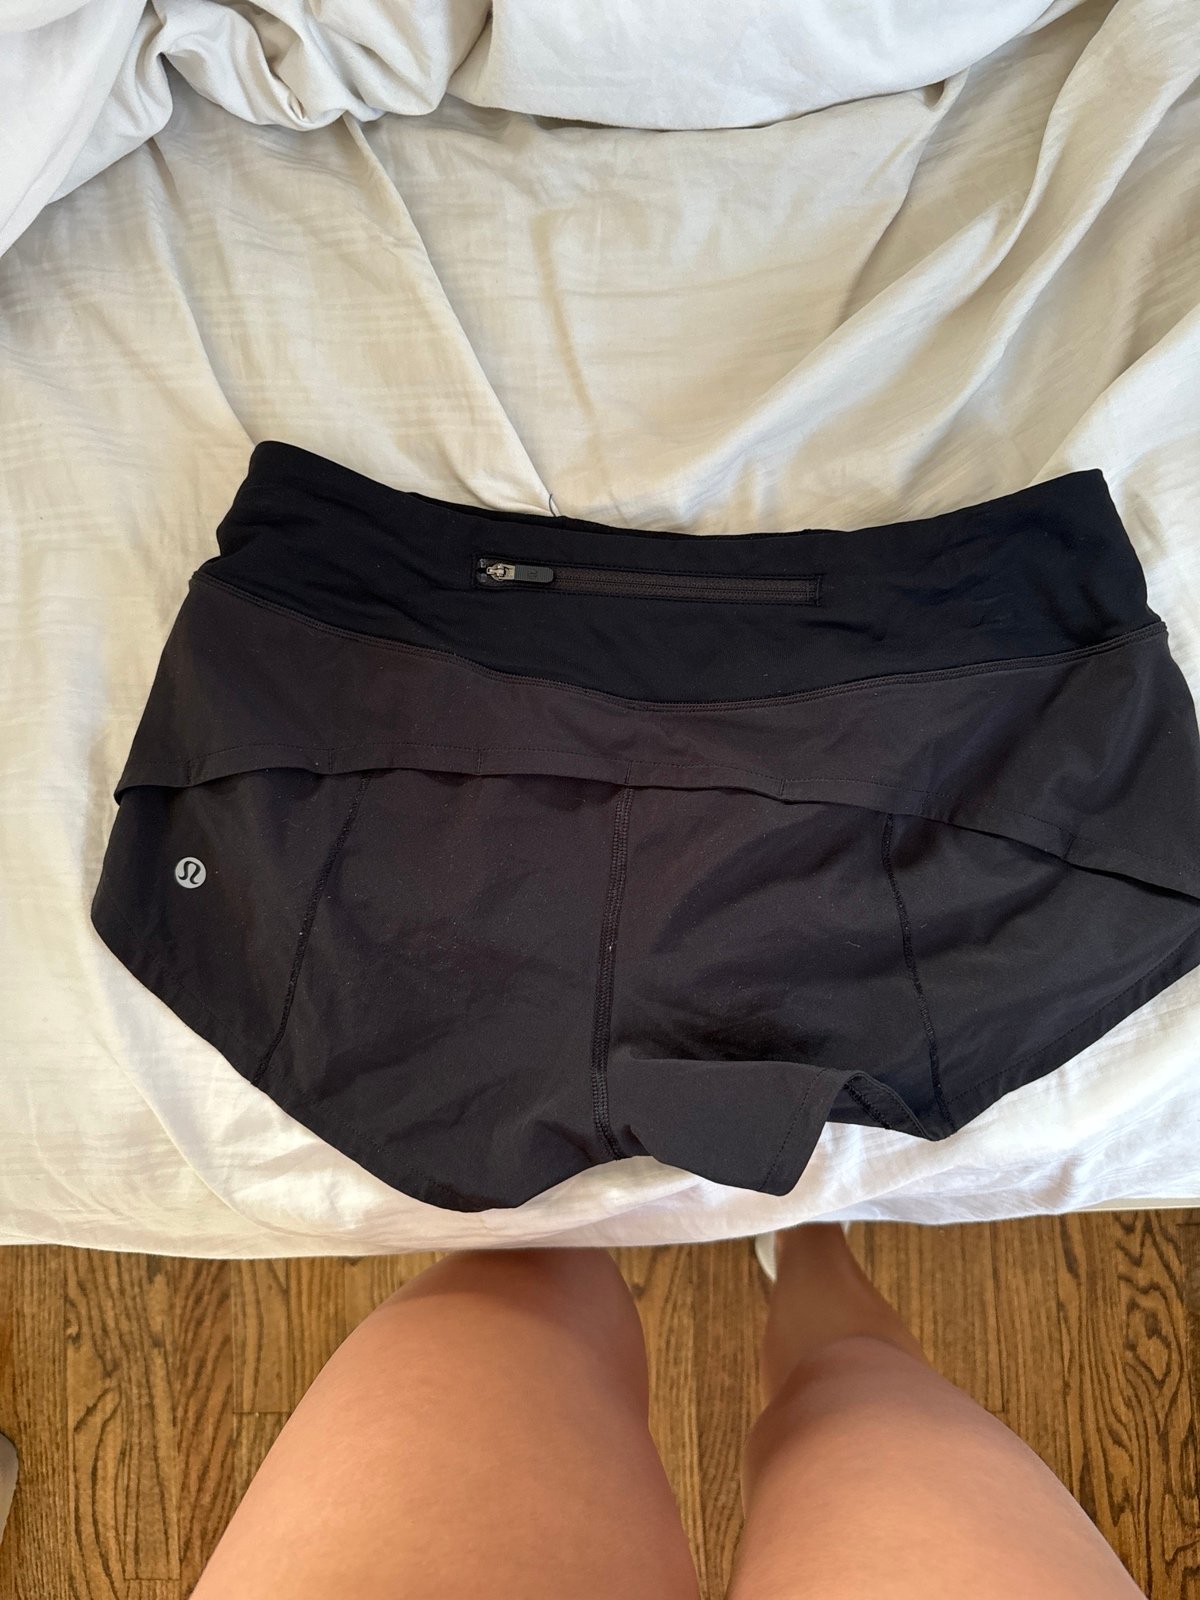 Perfect Lululemon shorts lM3gdfYwT Cheap